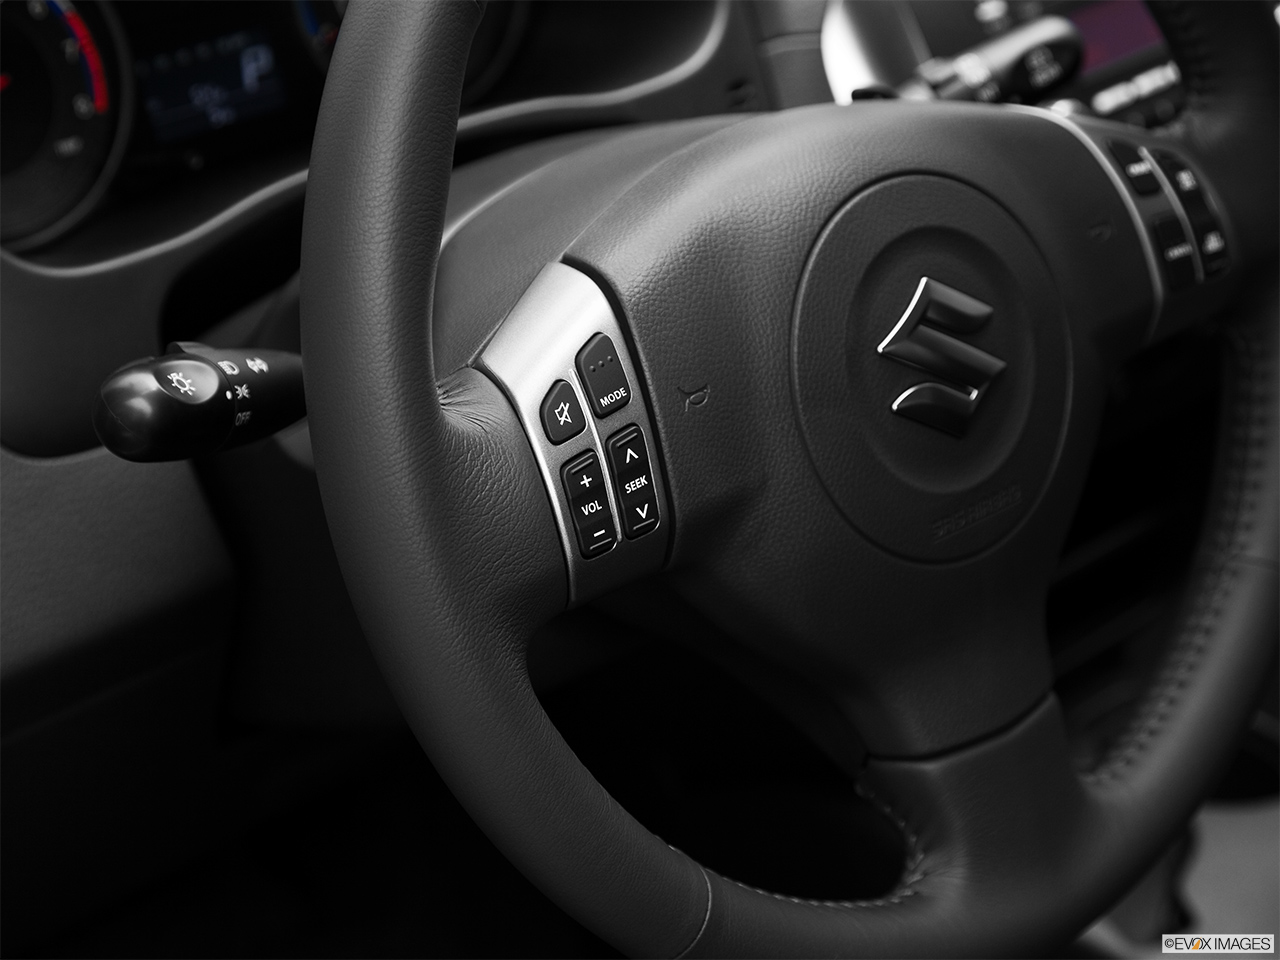 2011 Suzuki SX4 Sportback Technology Steering Wheel Controls (Left Side) 